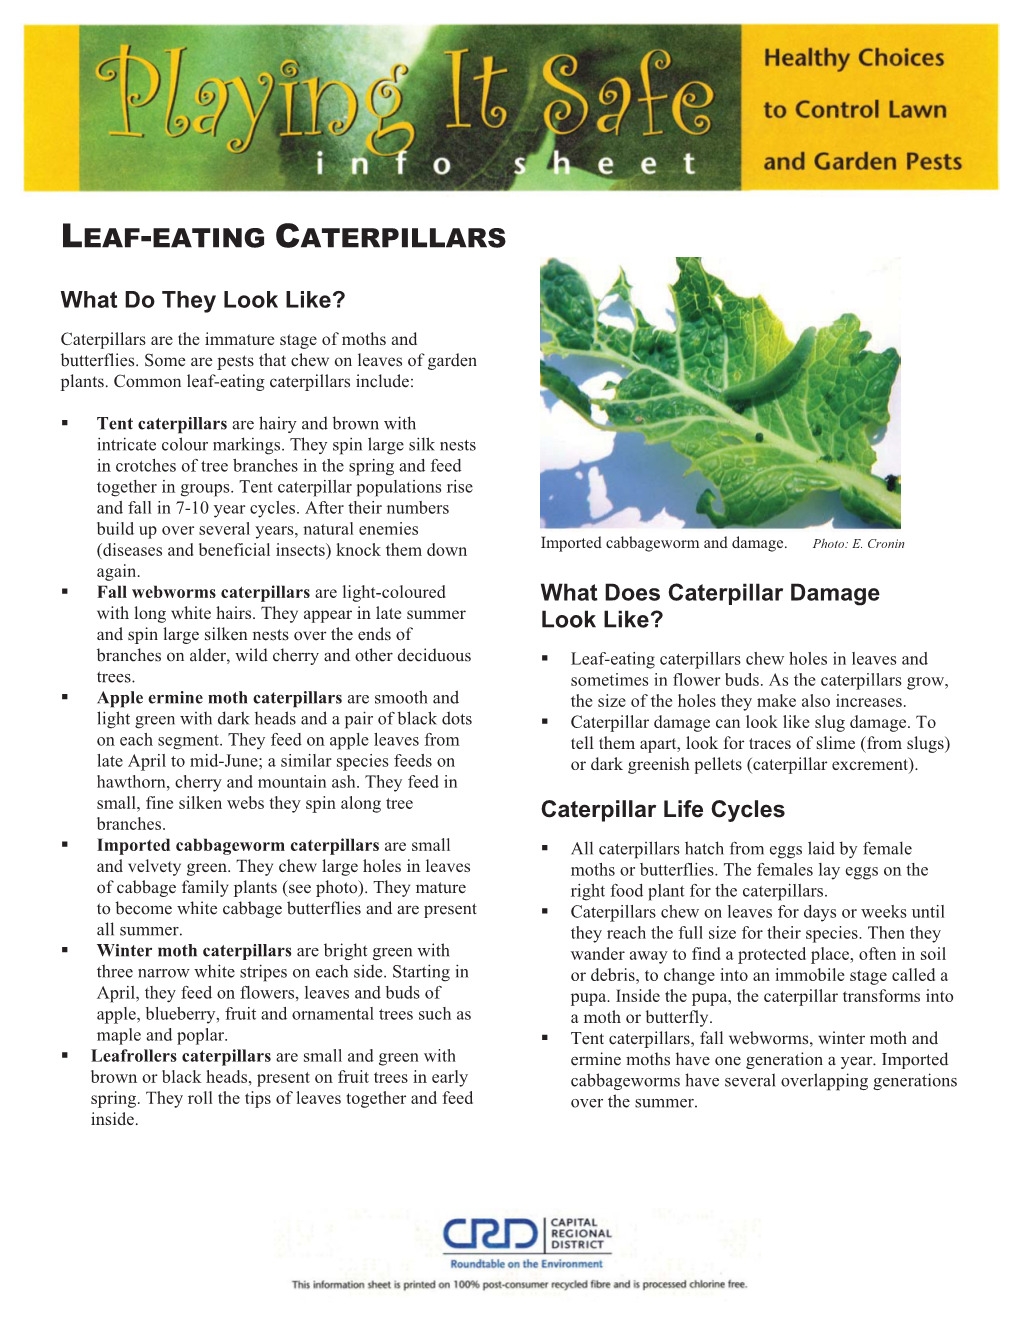 Leaf-Eating Caterpillars